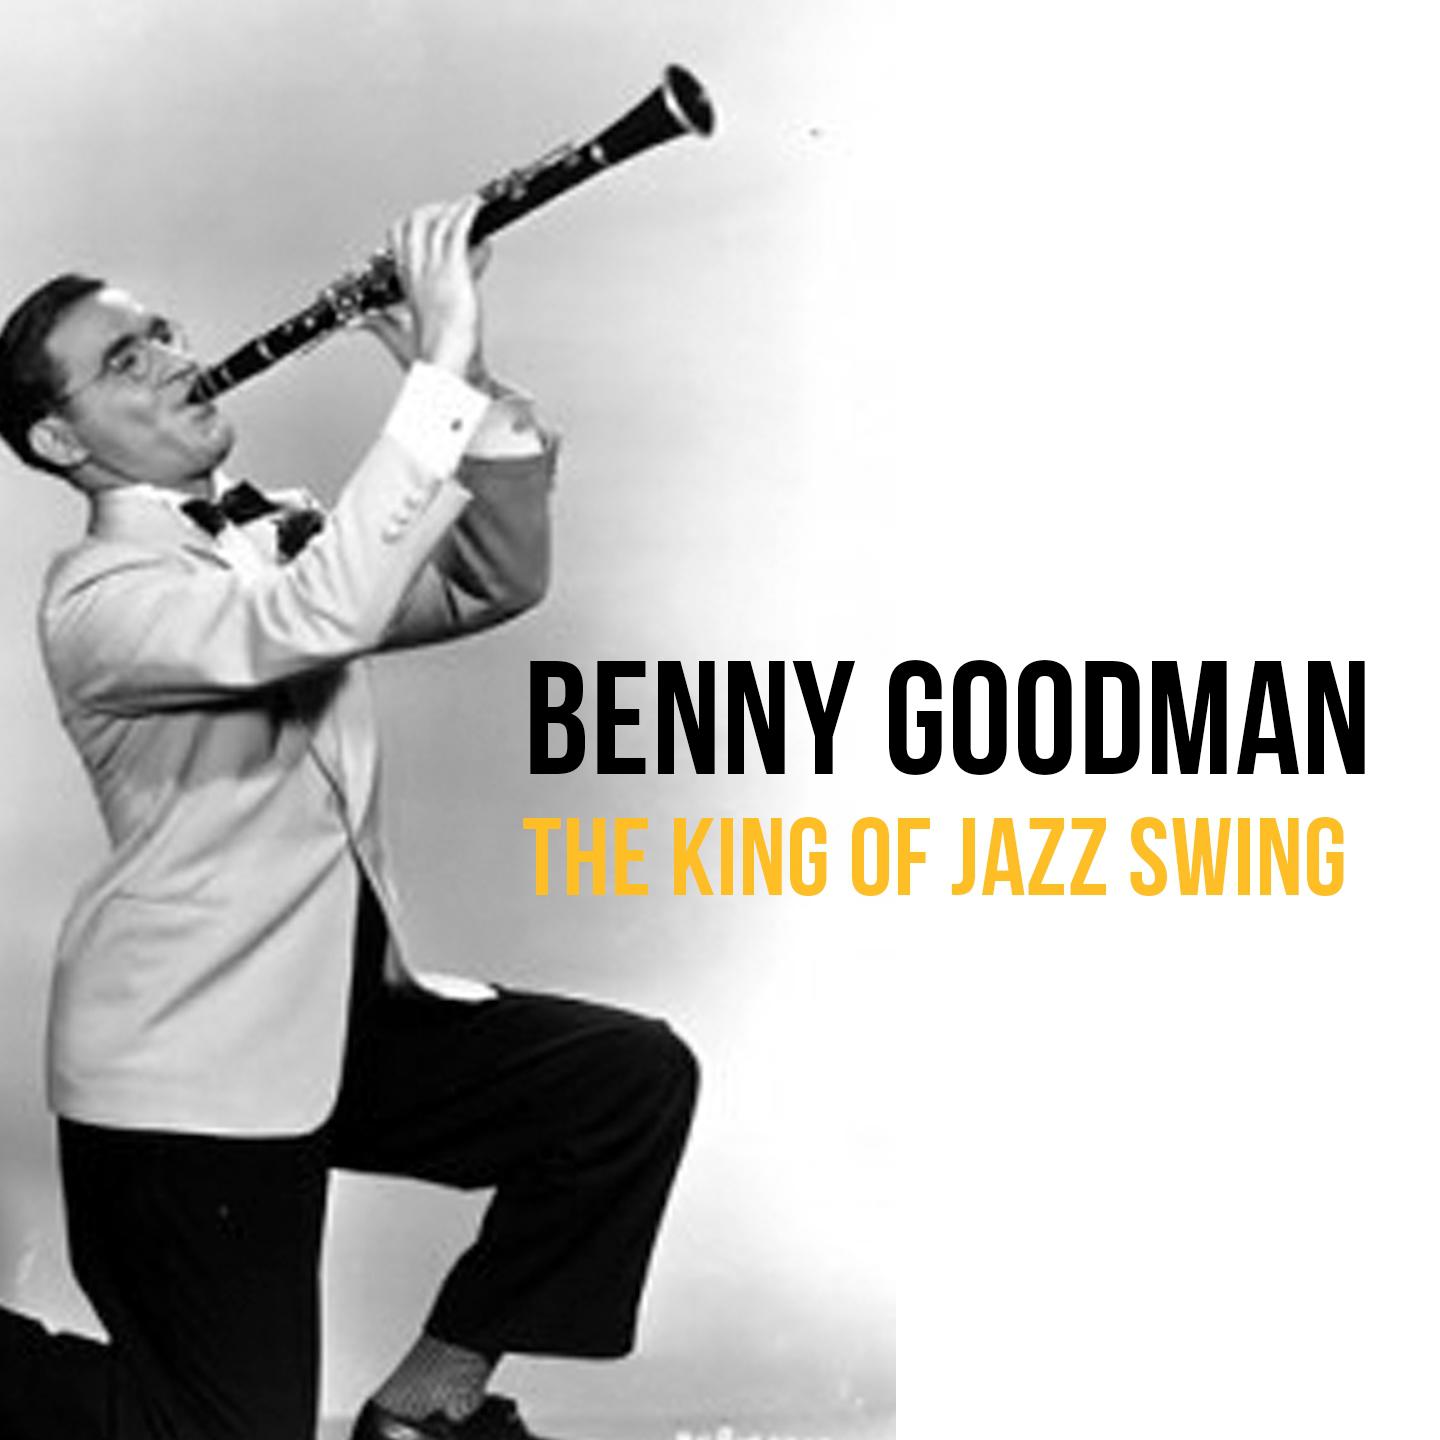 The King of Jazz Swing, Benny Goodman